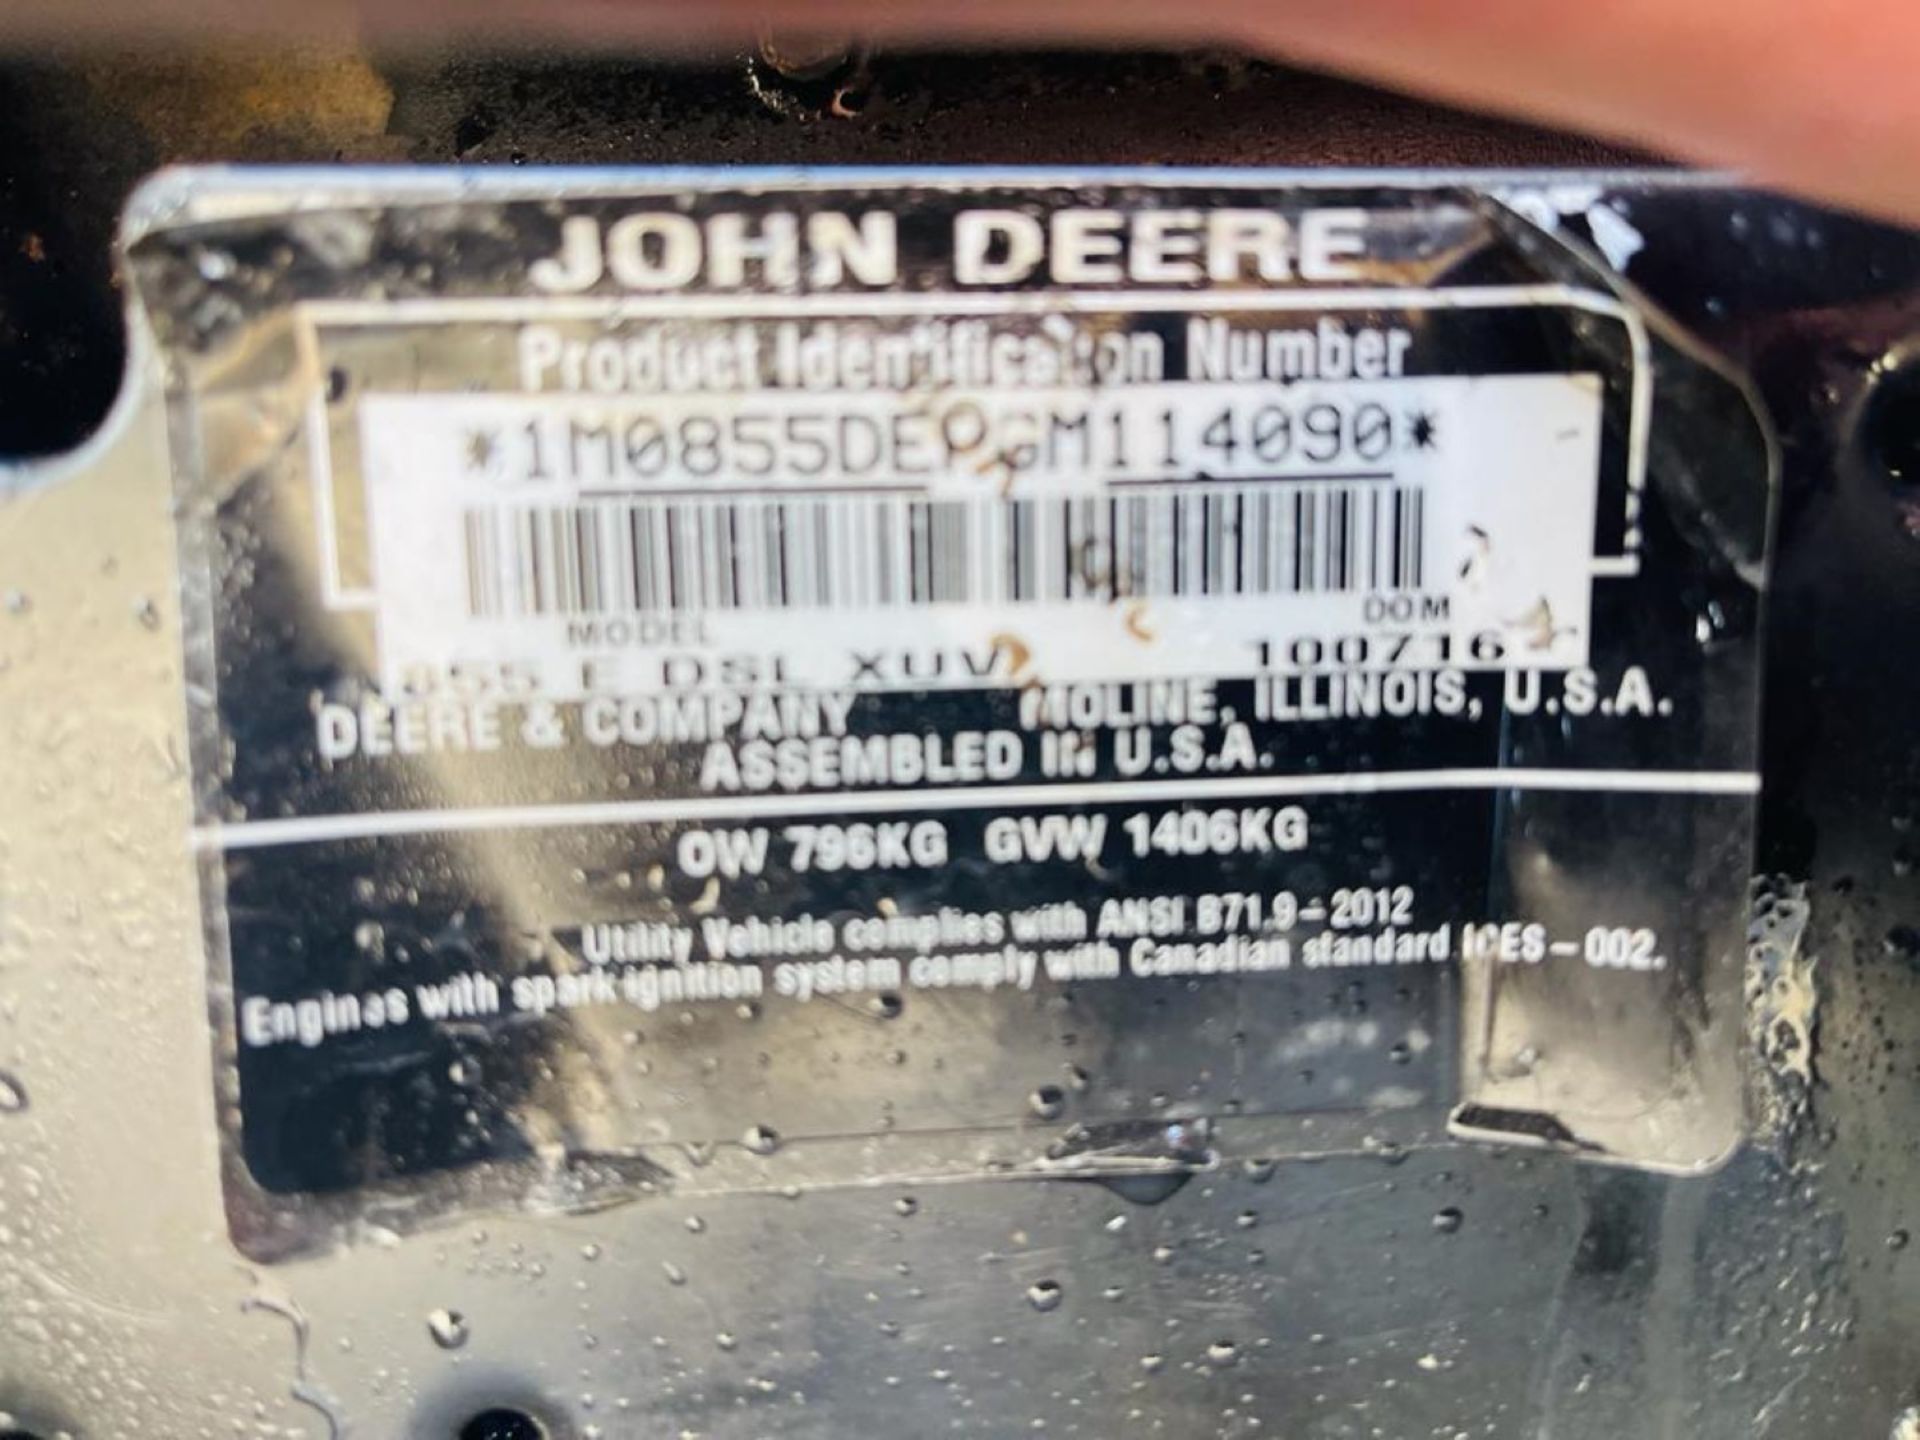 JOHN DEERE XUV855D GAITOR - Image 15 of 17